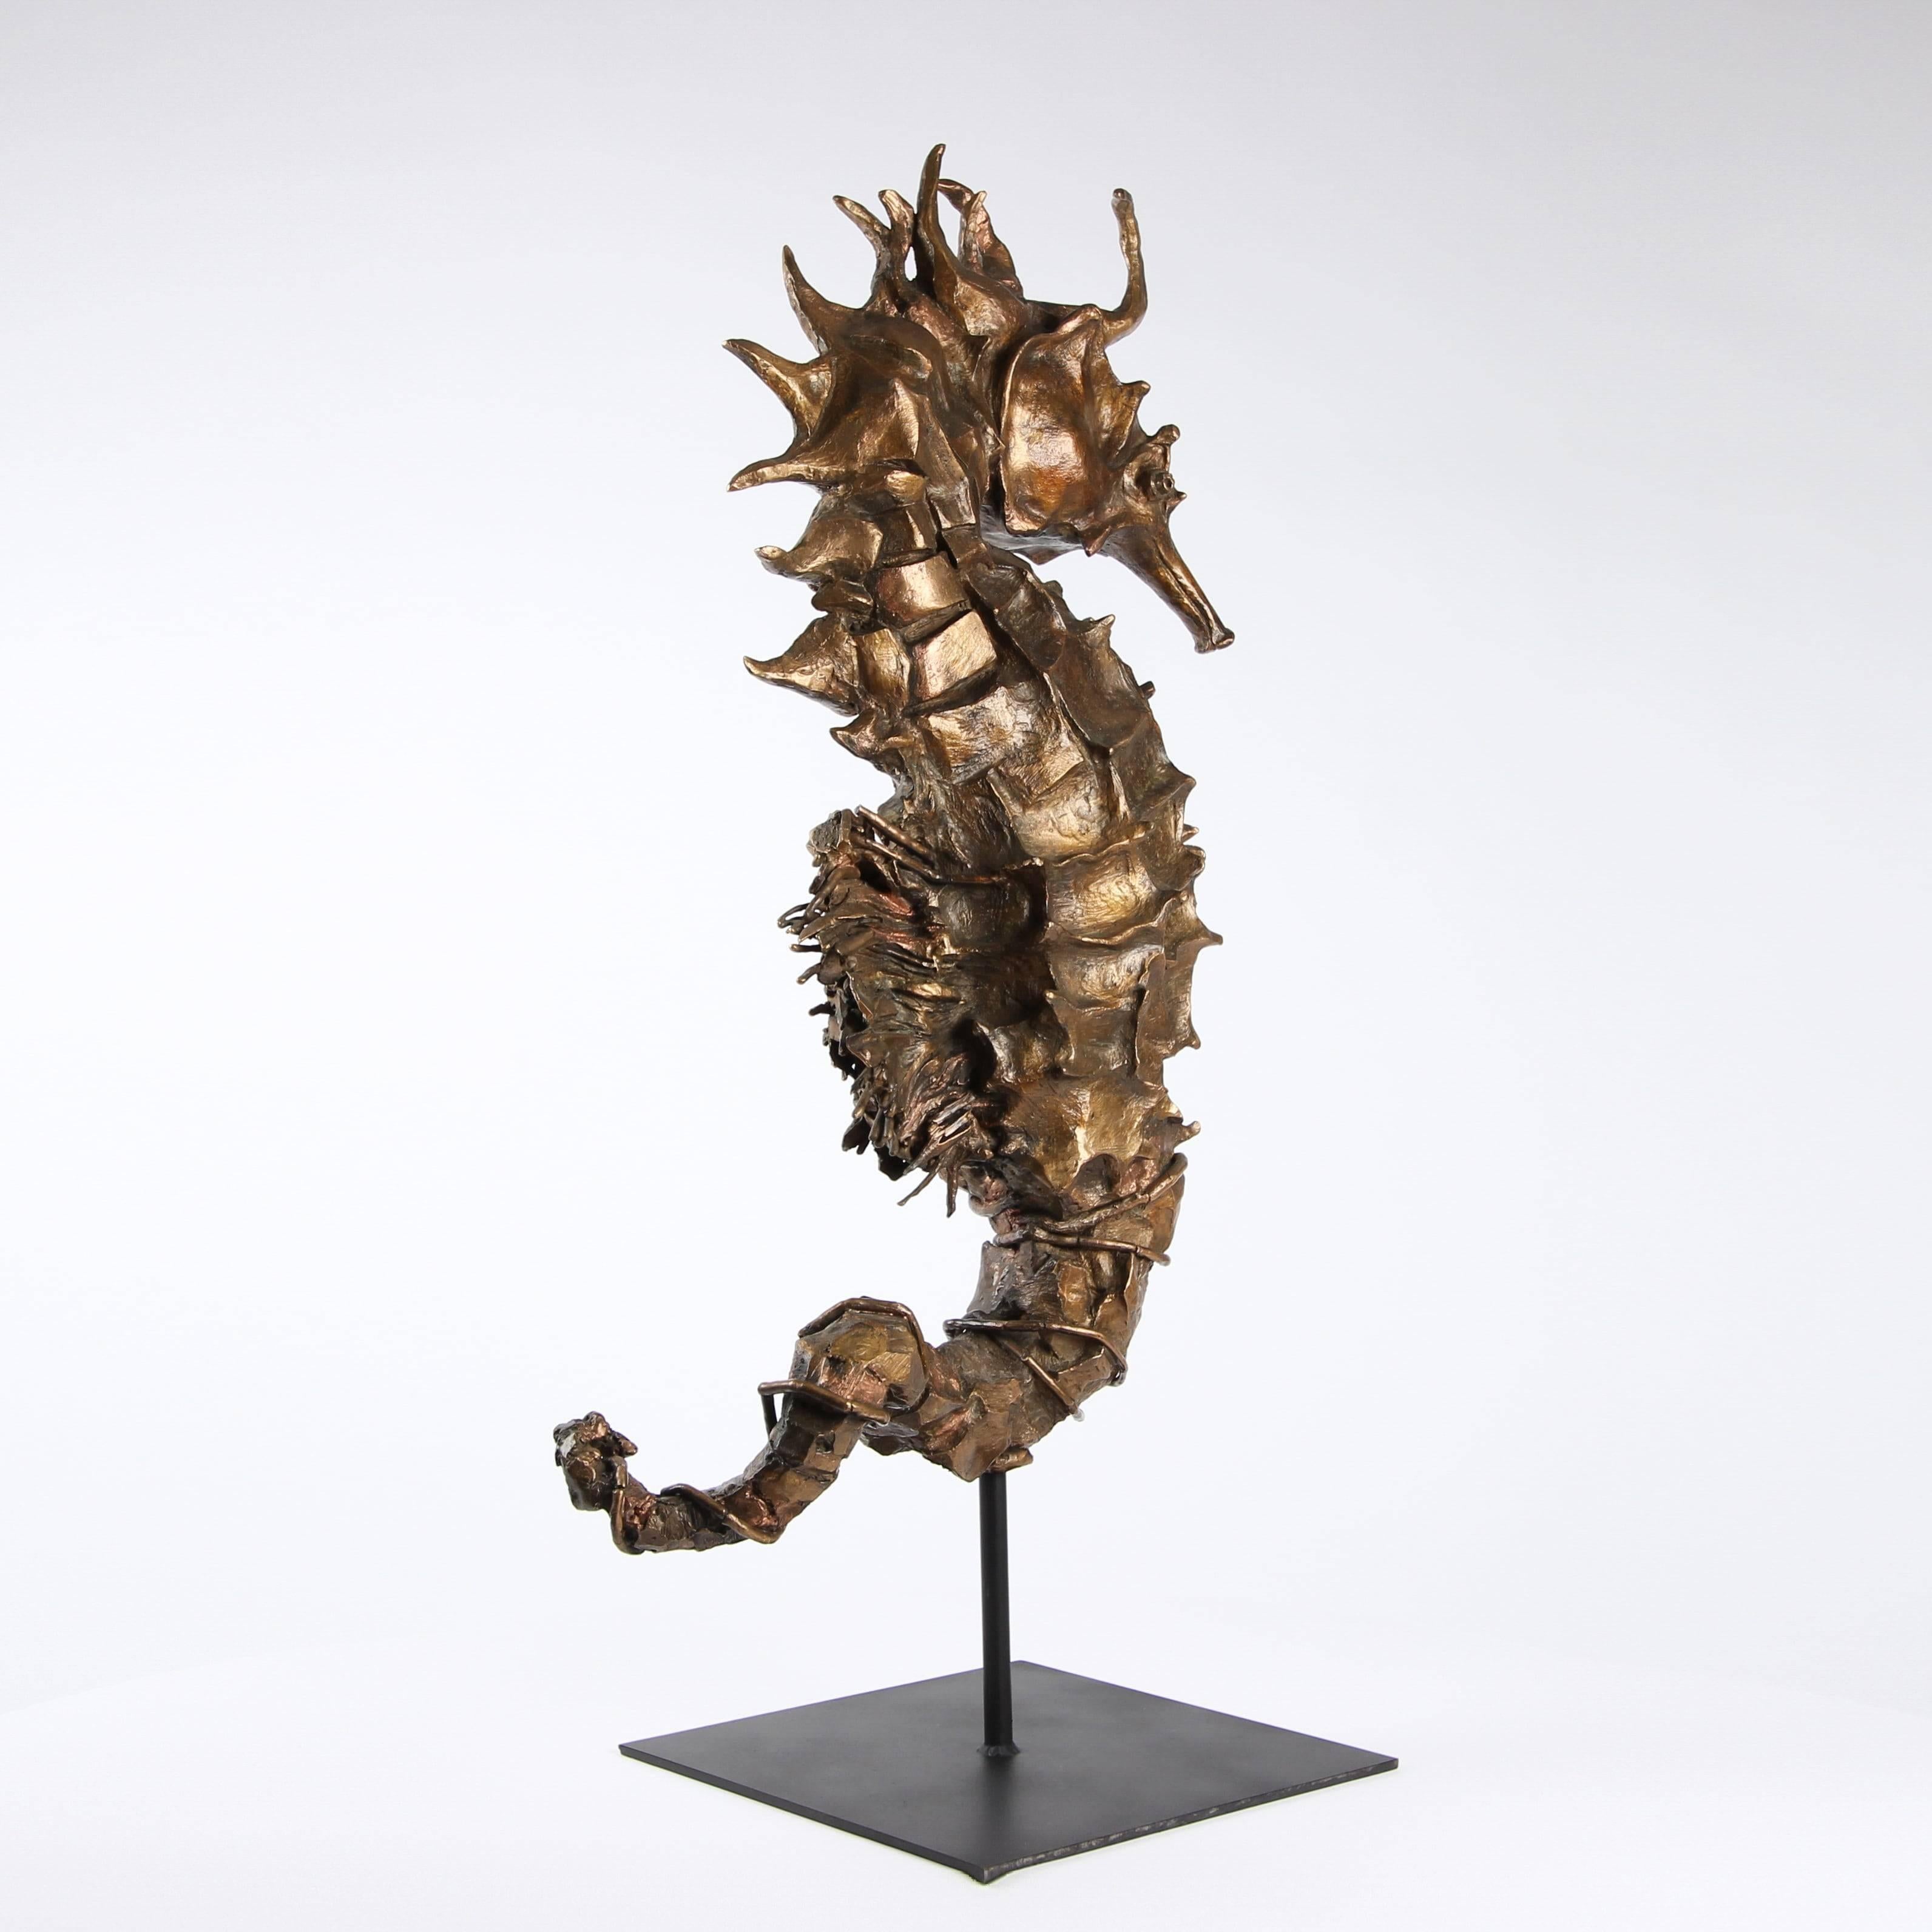 Seahorse Rex Gold by Chésade - Sealife bronze sculpture, sea animal For Sale 5